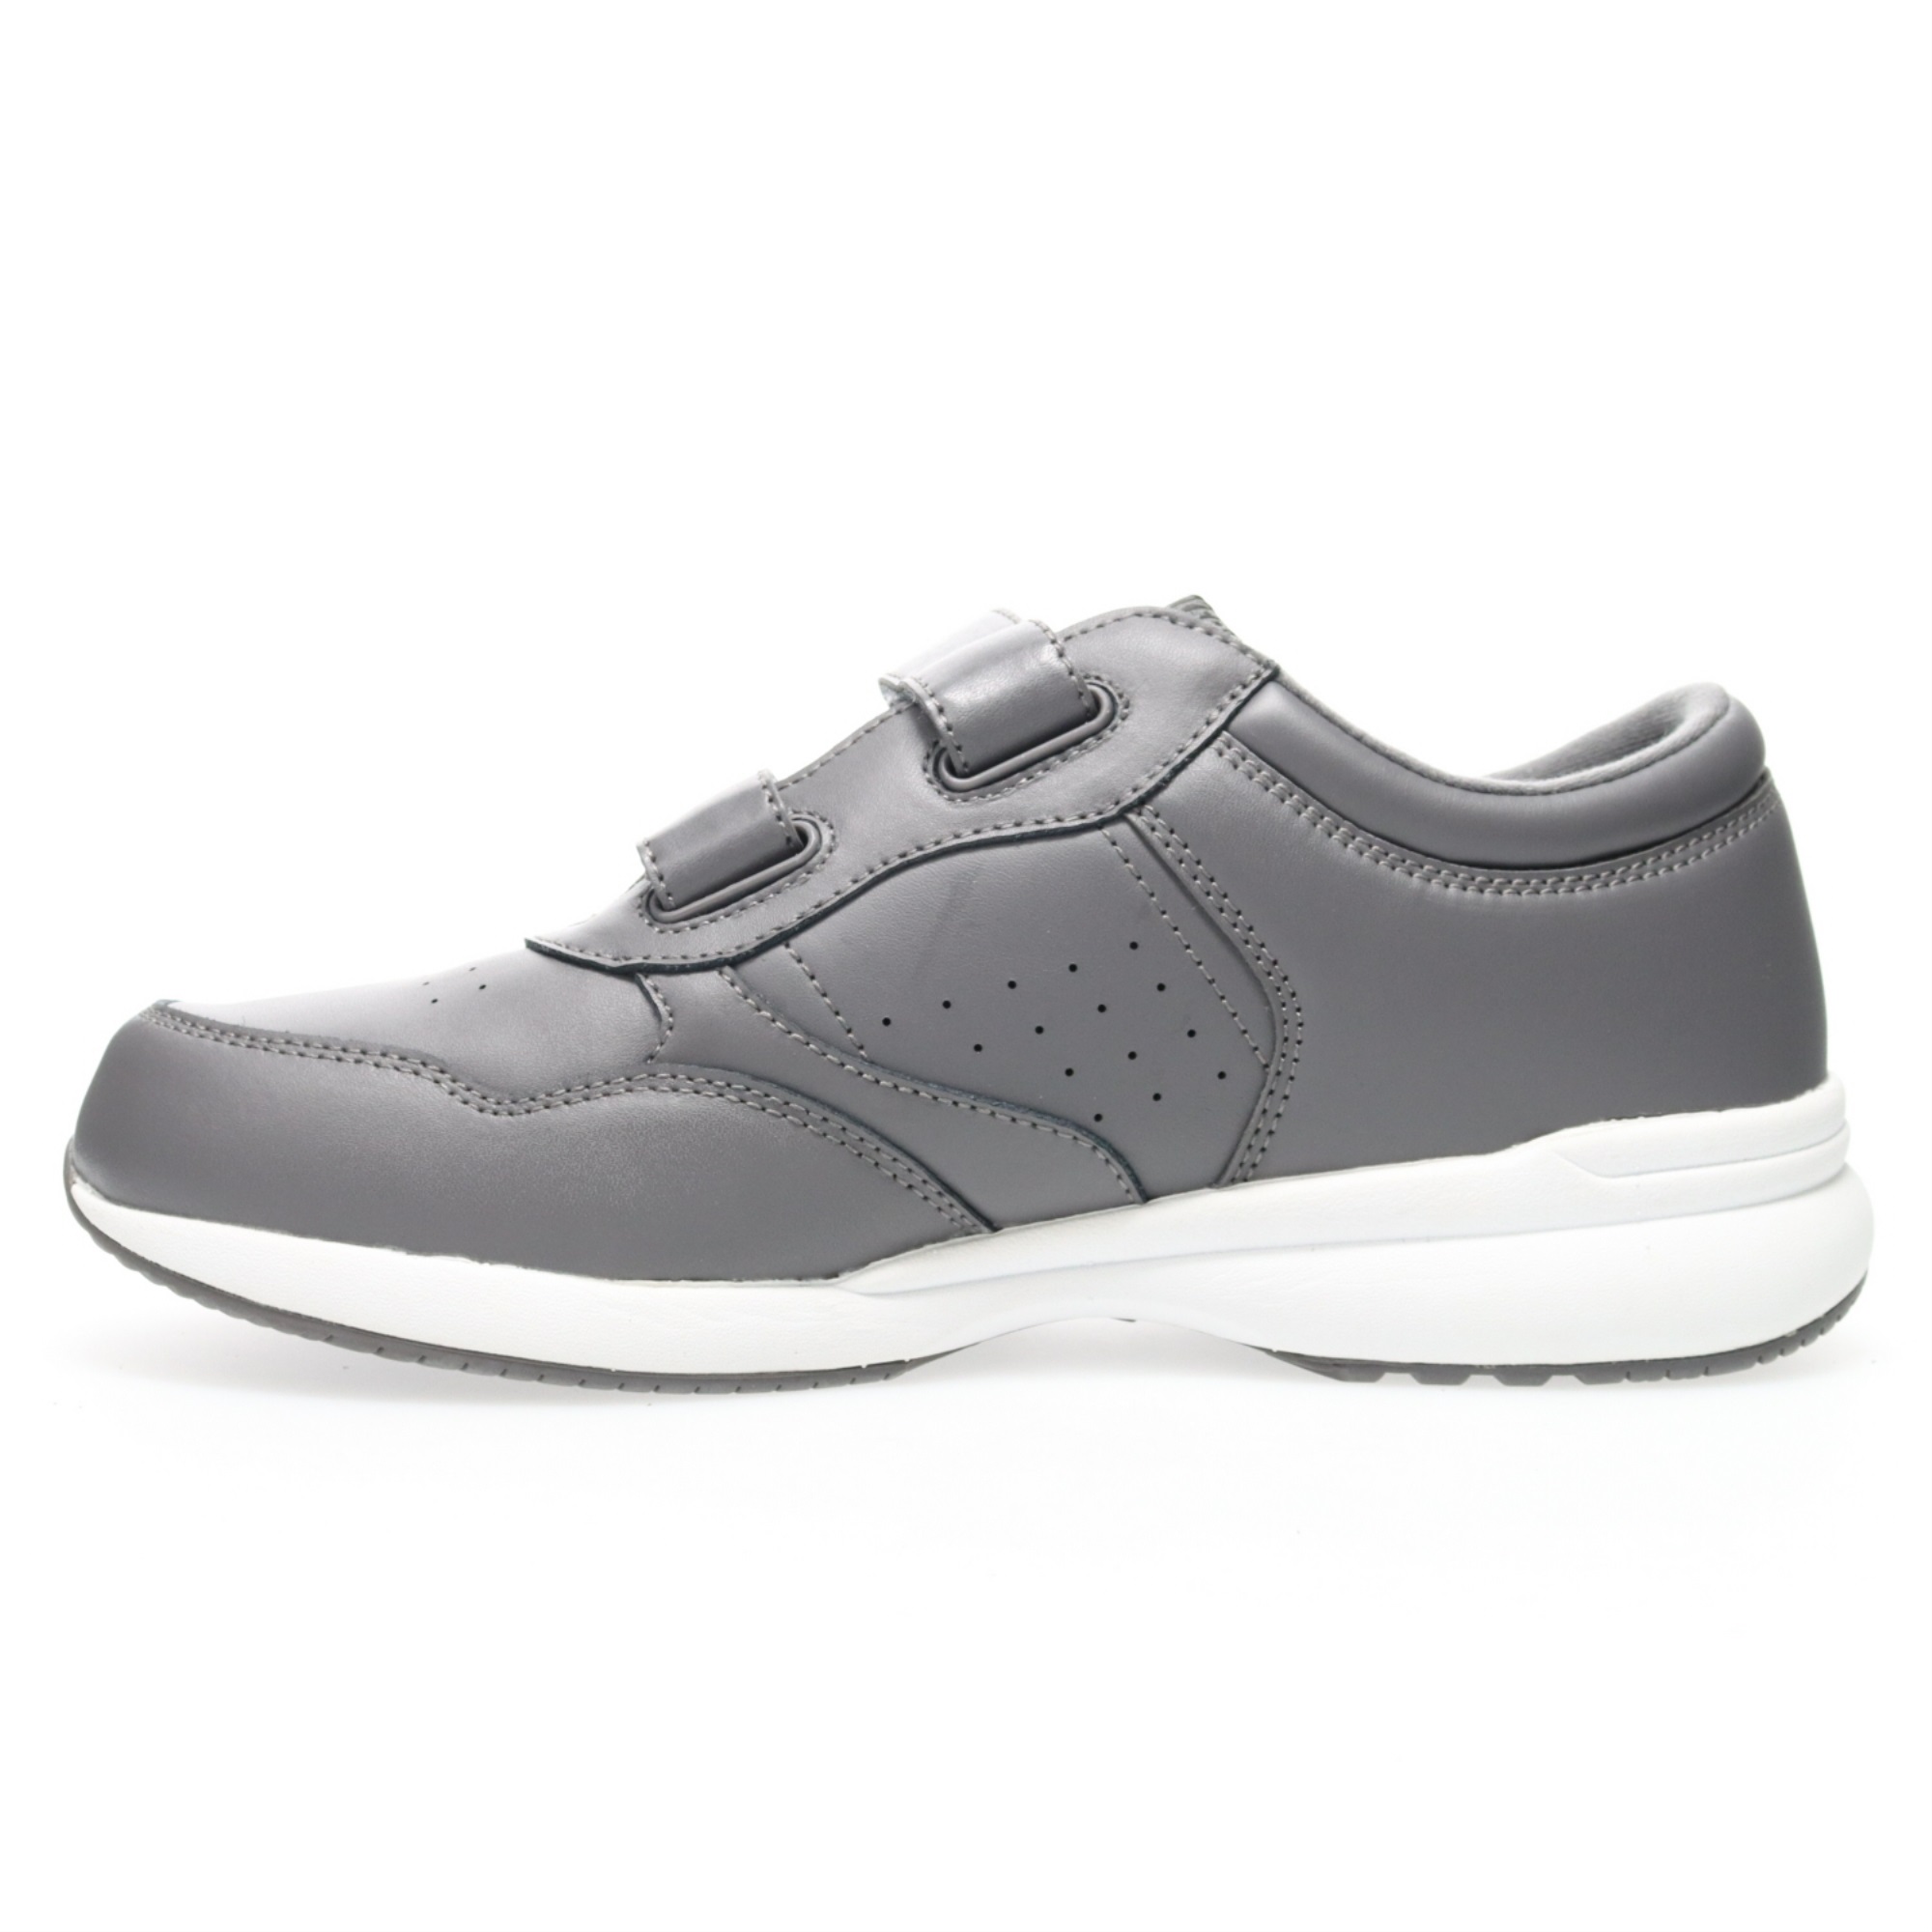 Propet Life Walker Strap Men's Sneakers - Dark Grey, Size 12 - image 2 of 5